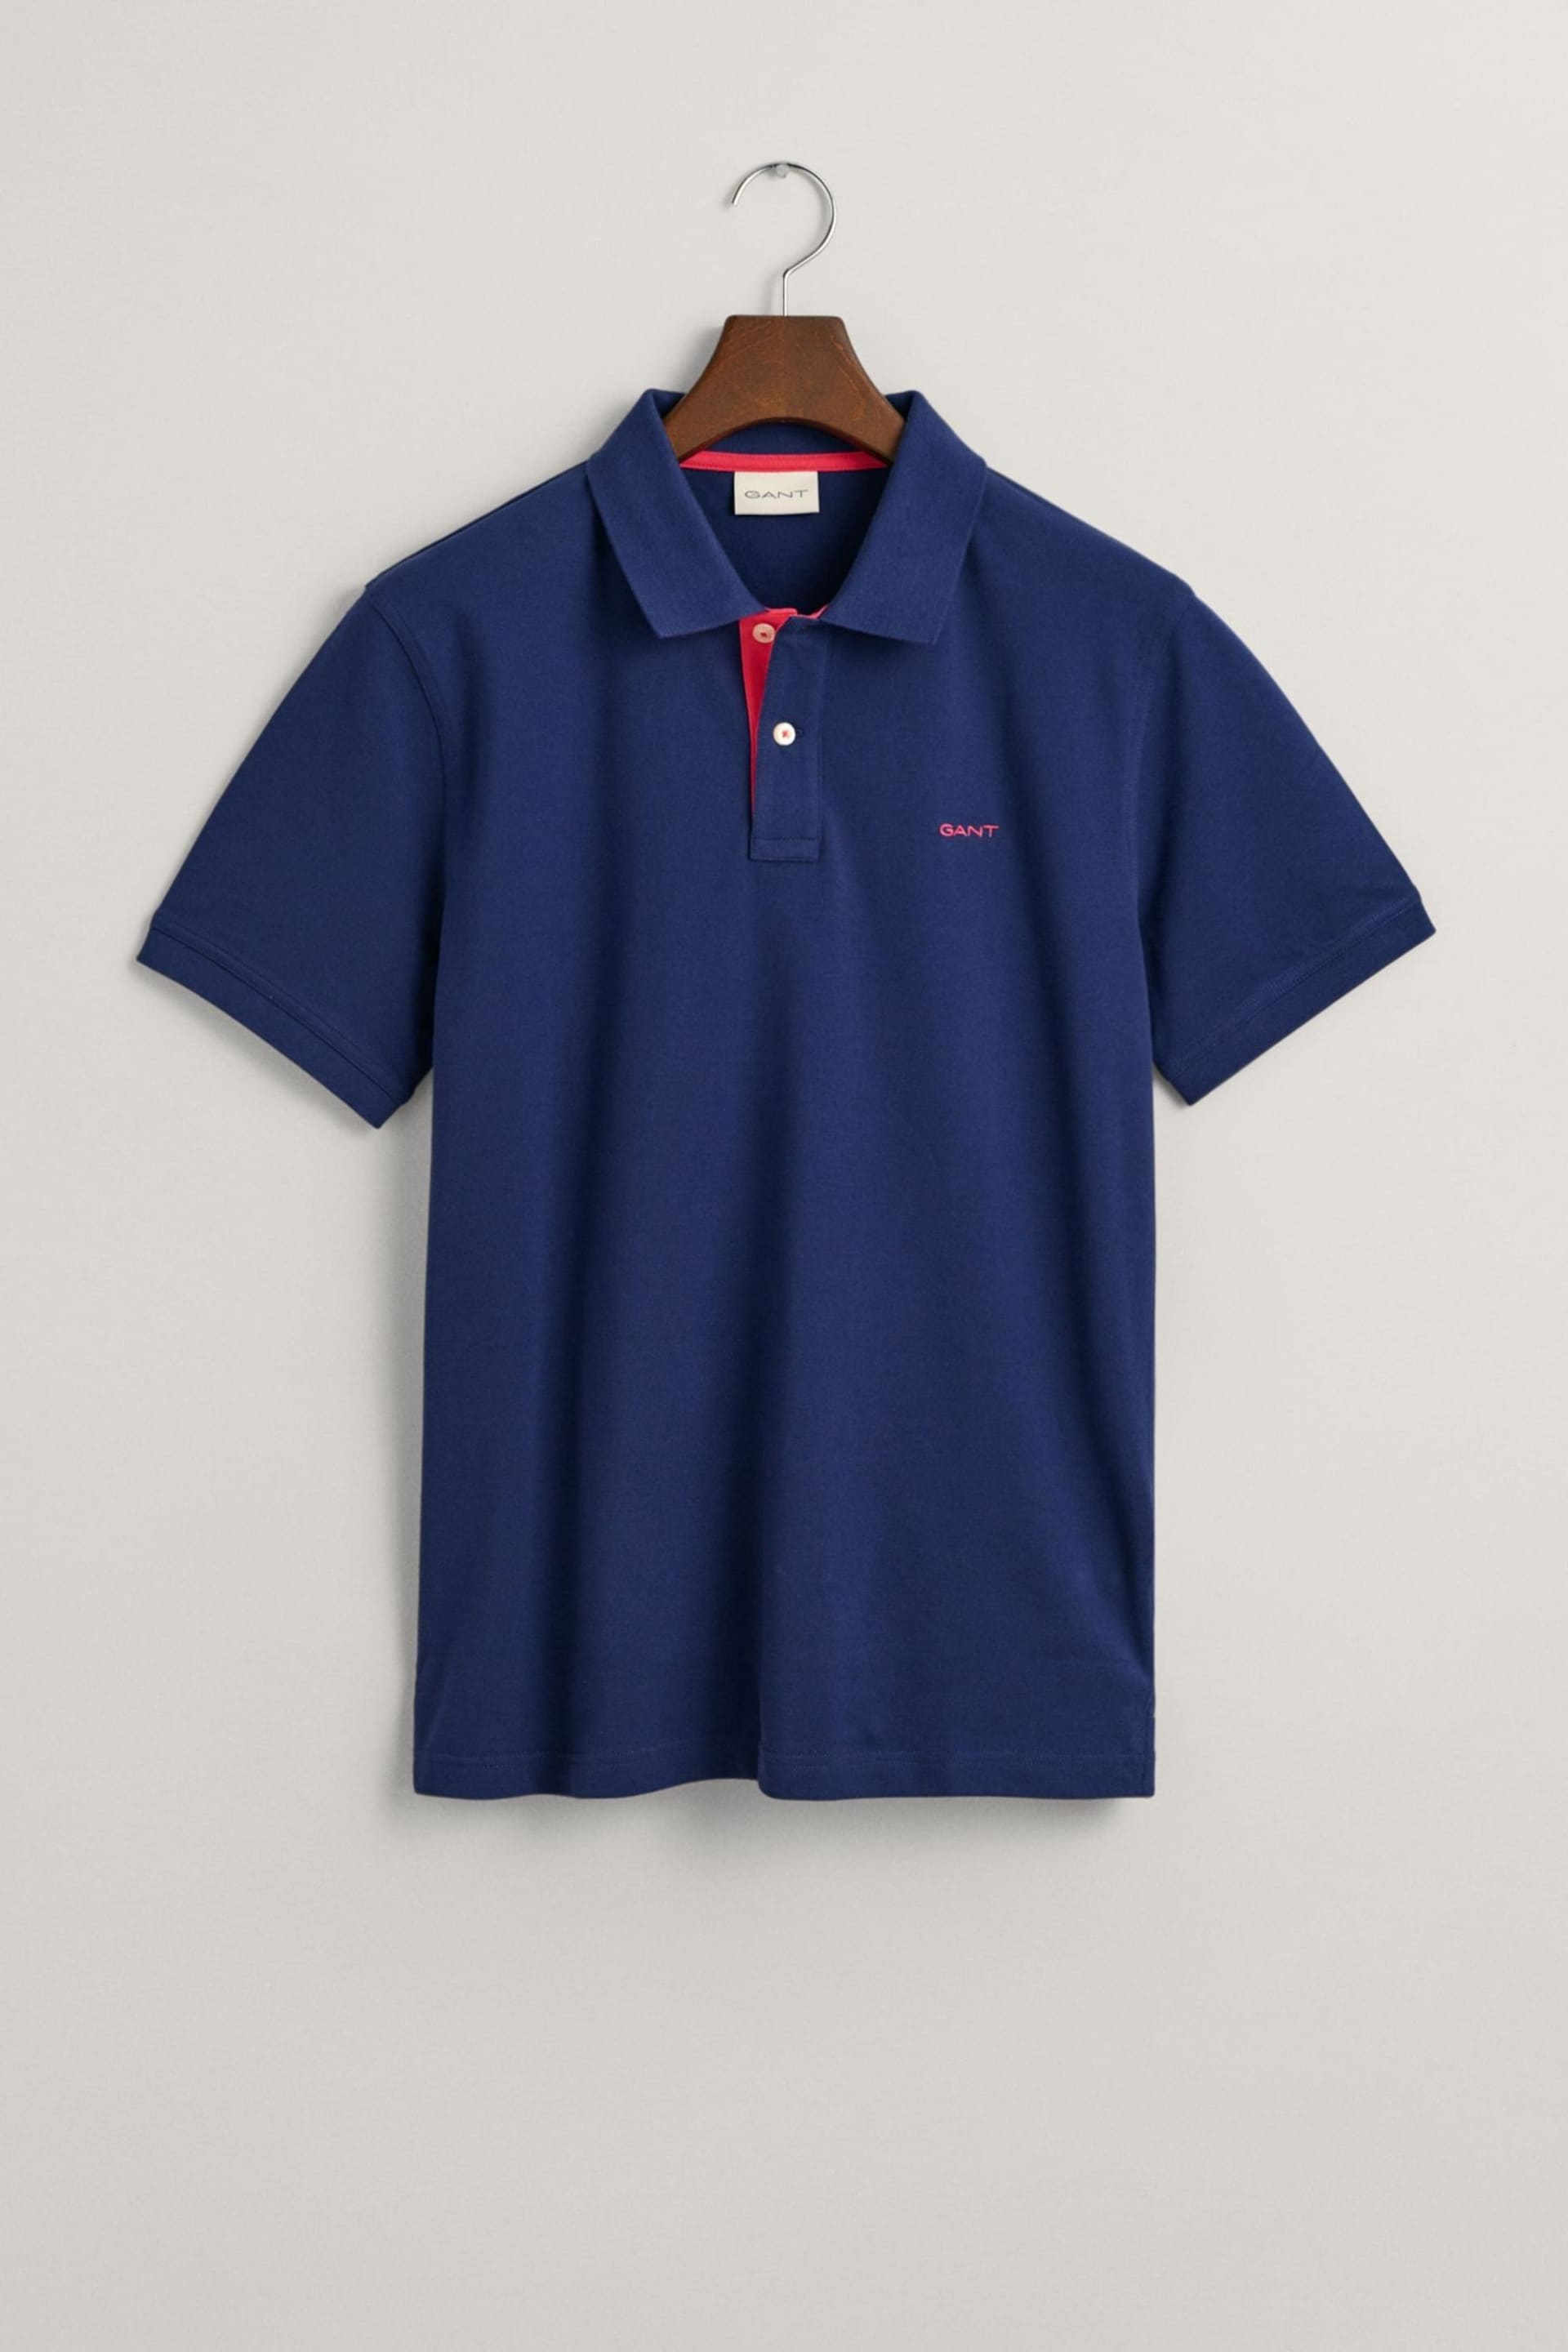 GANT Dark Blue Contrast Collar Polo Shirt - Image 5 of 6